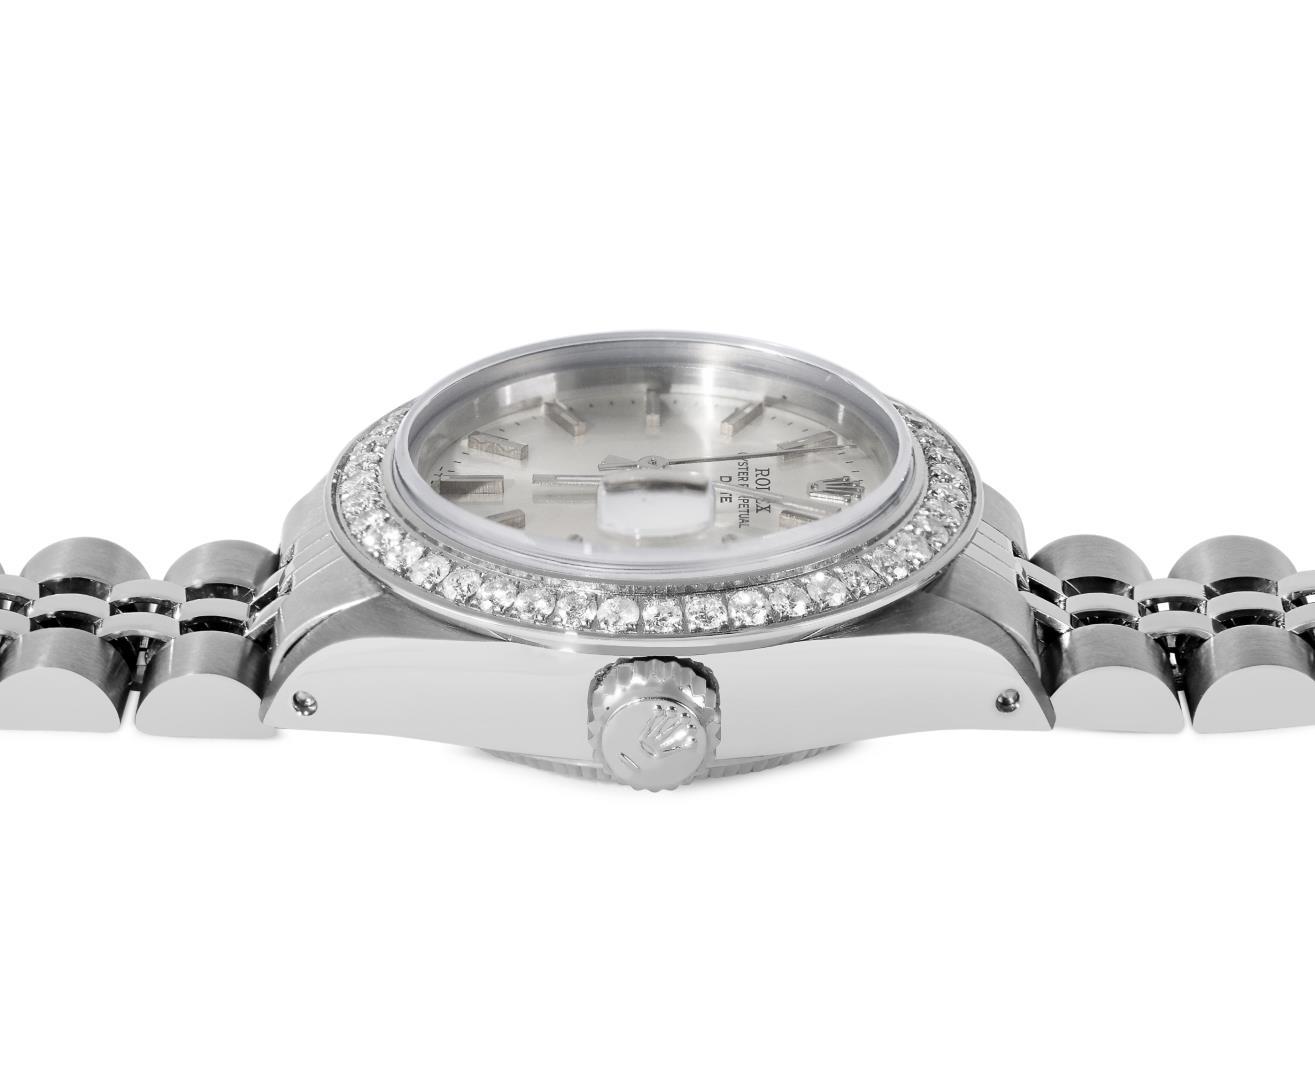 Rolex Ladies Stainless Steel Silver Index Diamond Bezel Date Watch With Rolex Bo